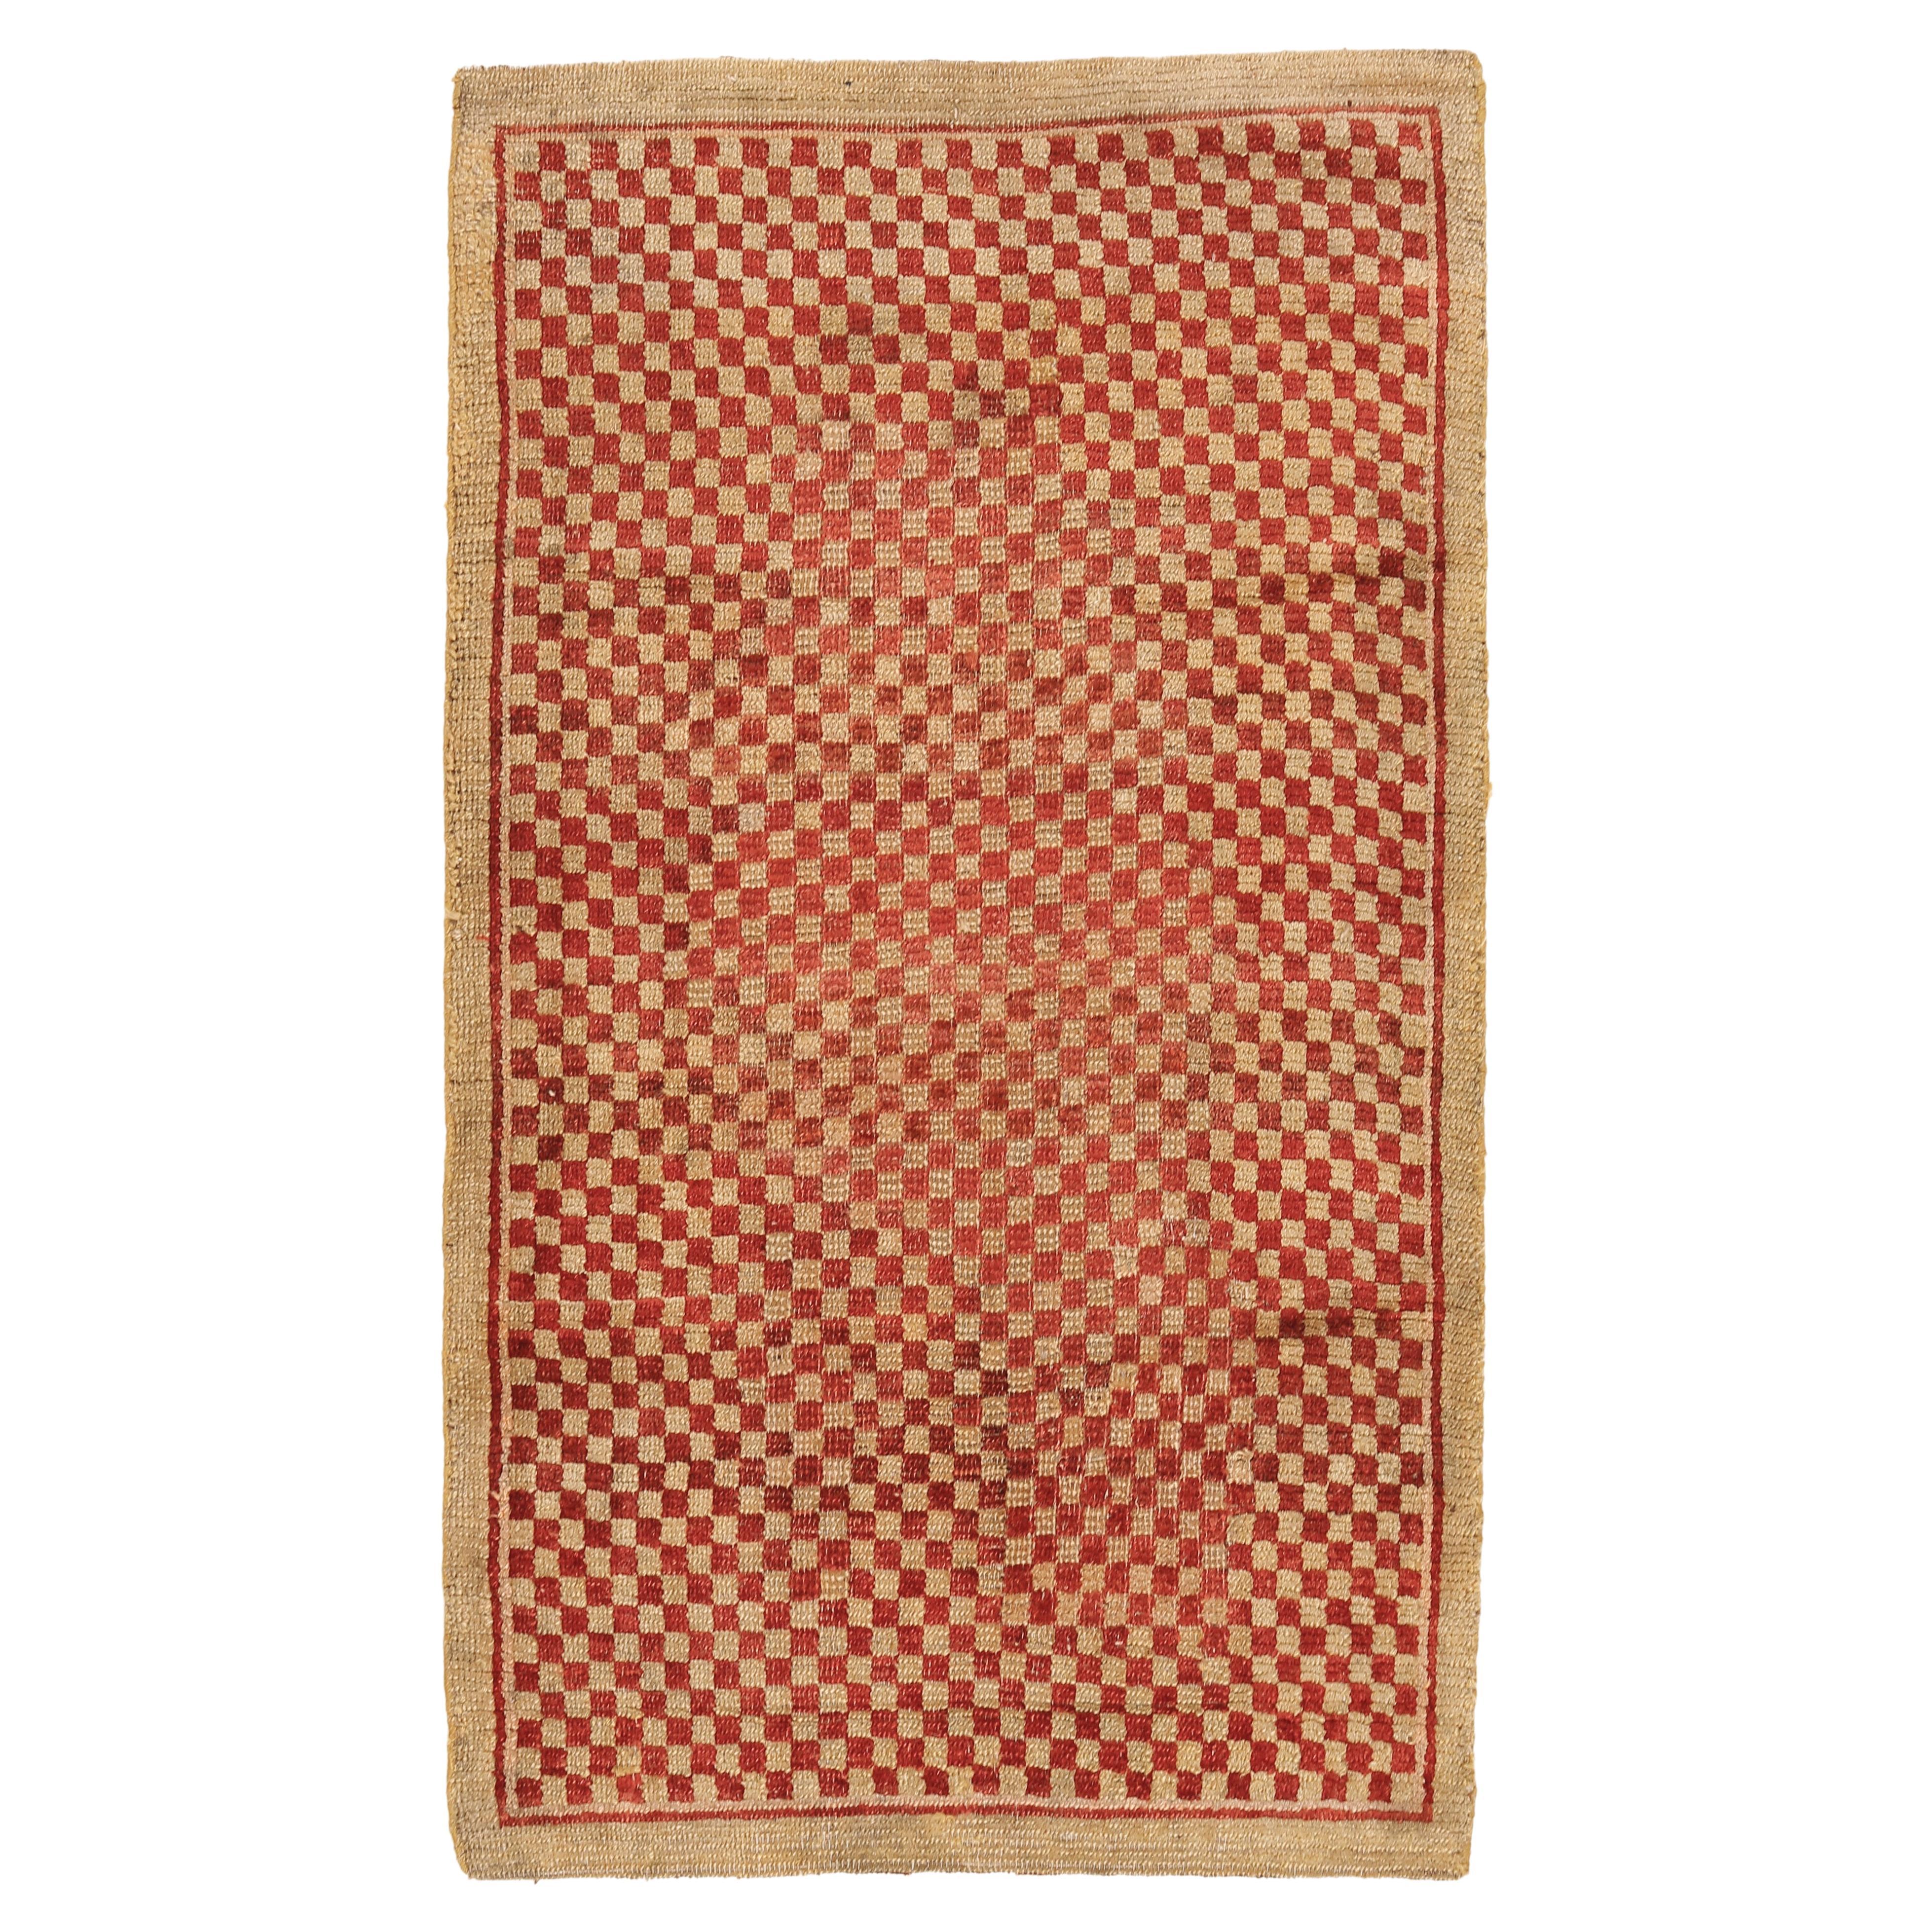 Antique Tibetan Red and White Checkerboard Design Meditation Rug